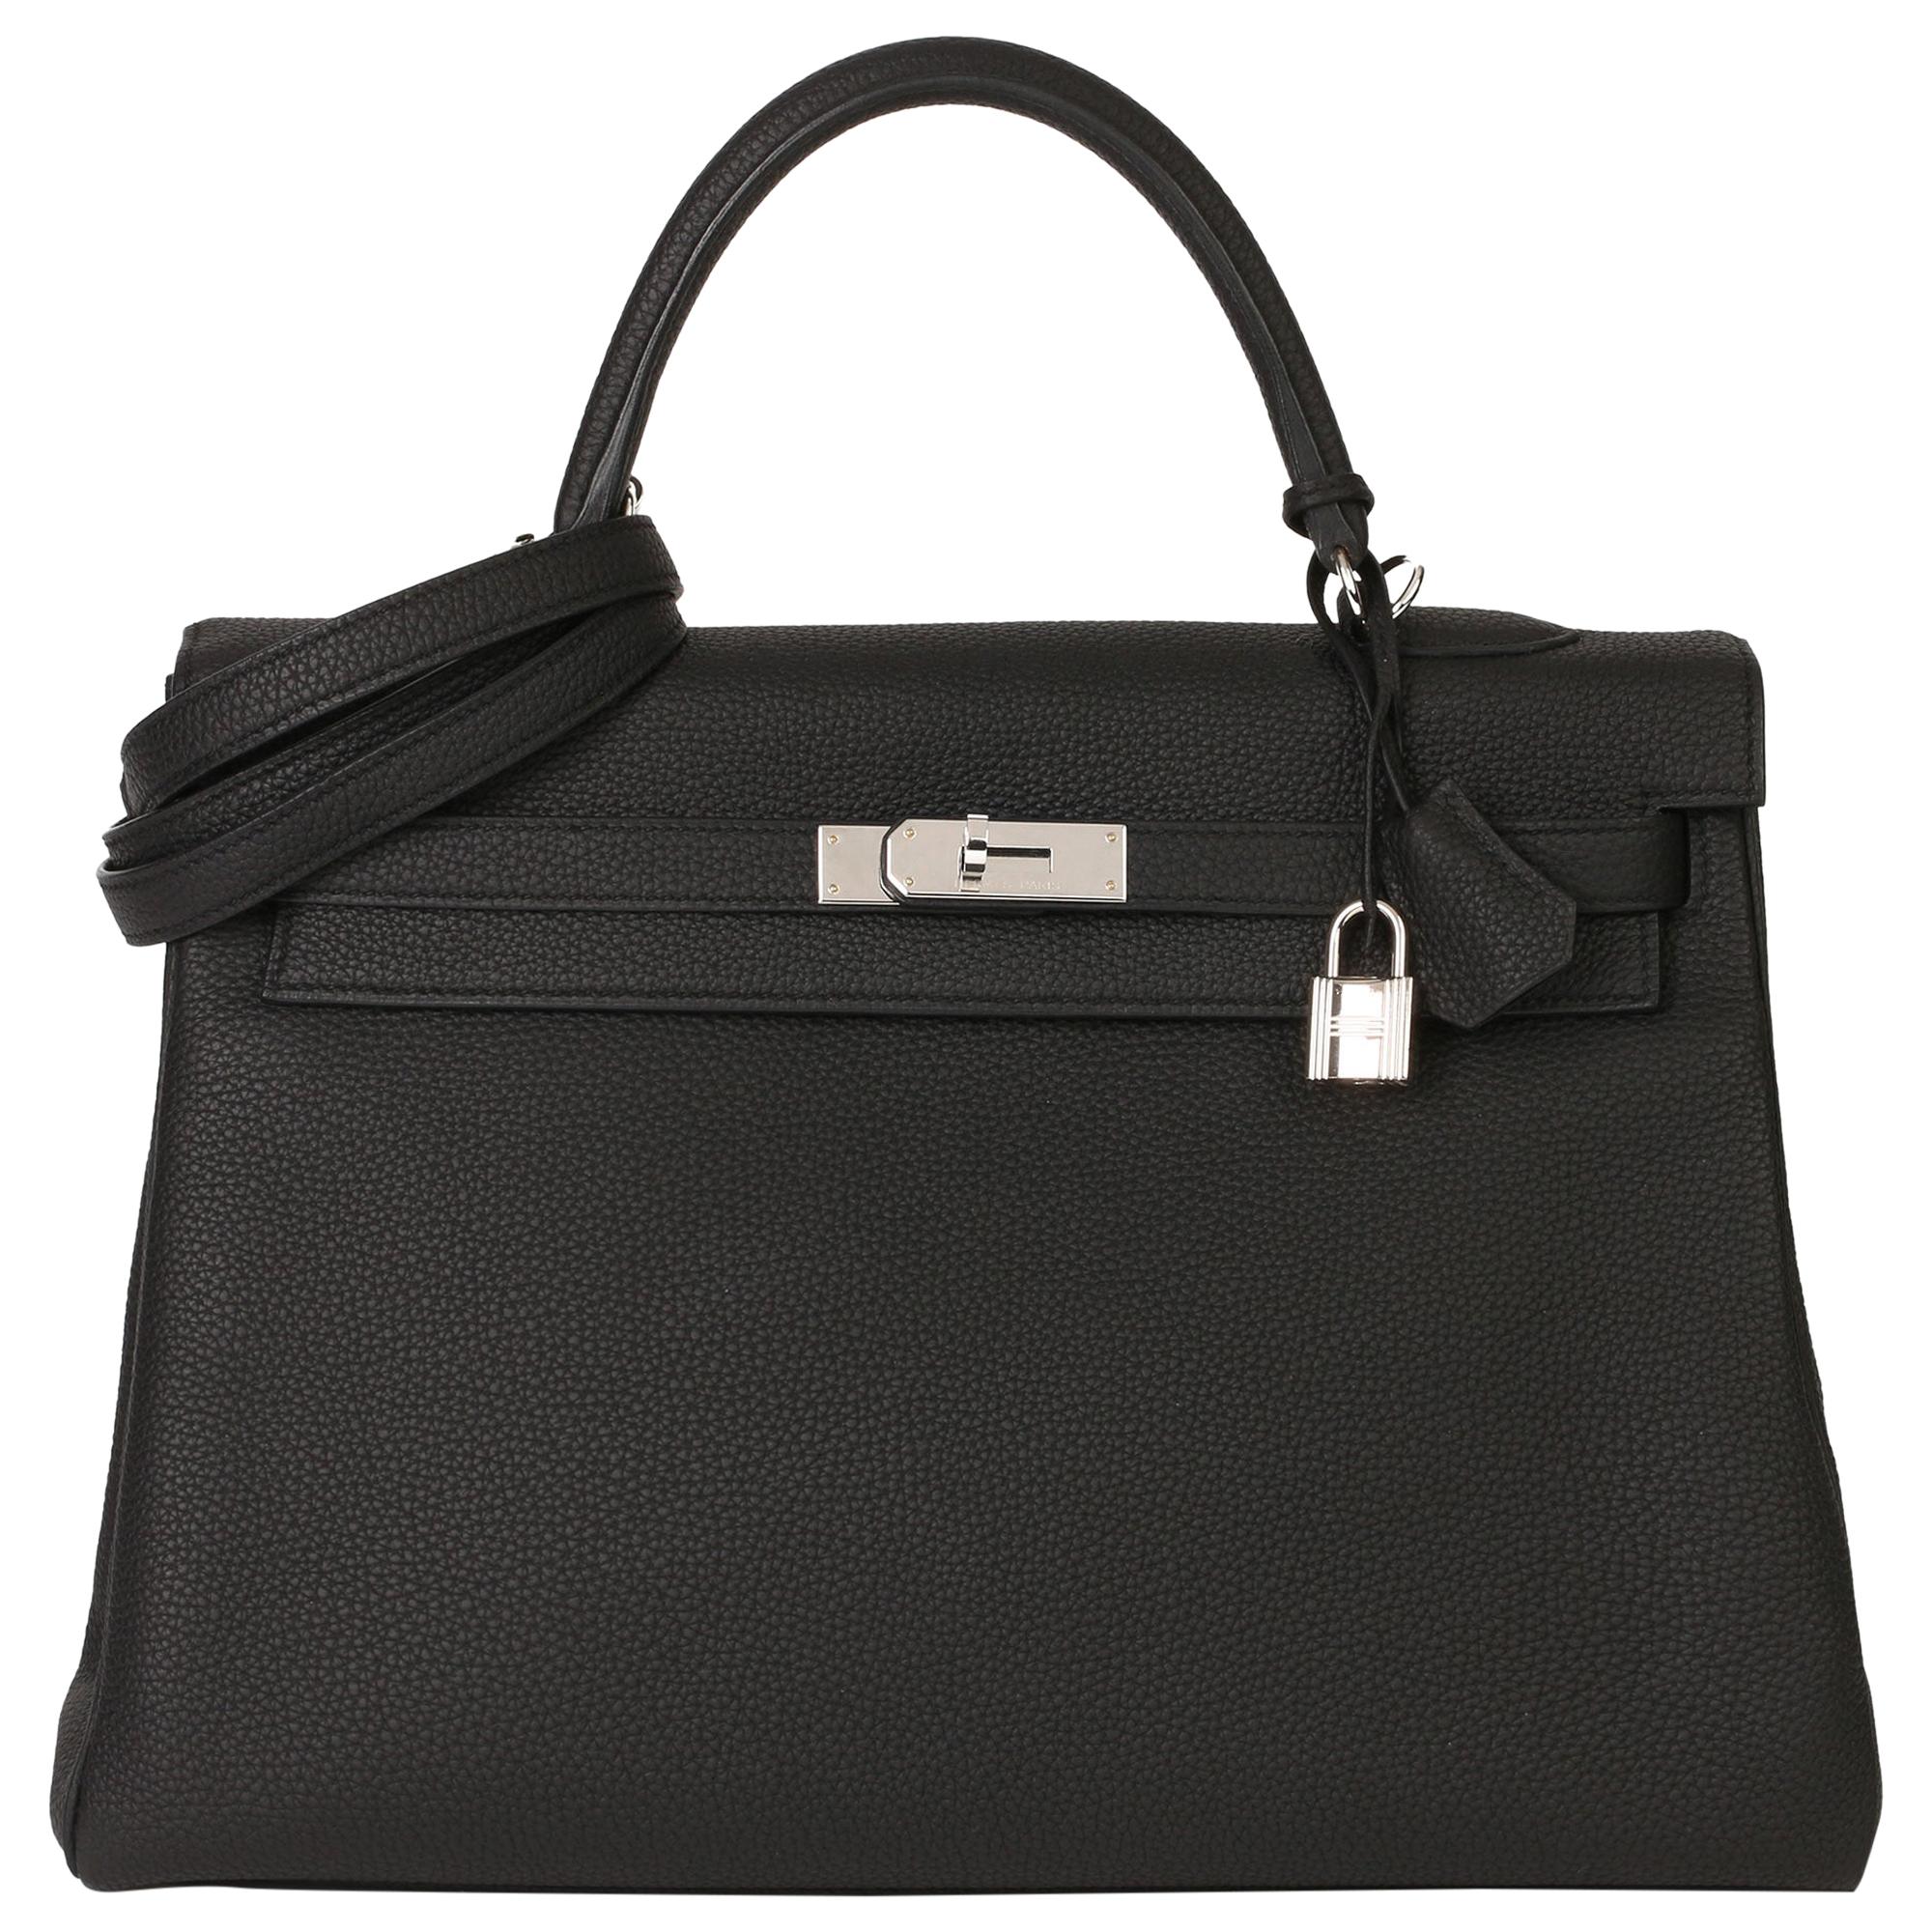 2018 Hermès Black Togo Leather Kelly 35cm Retourne